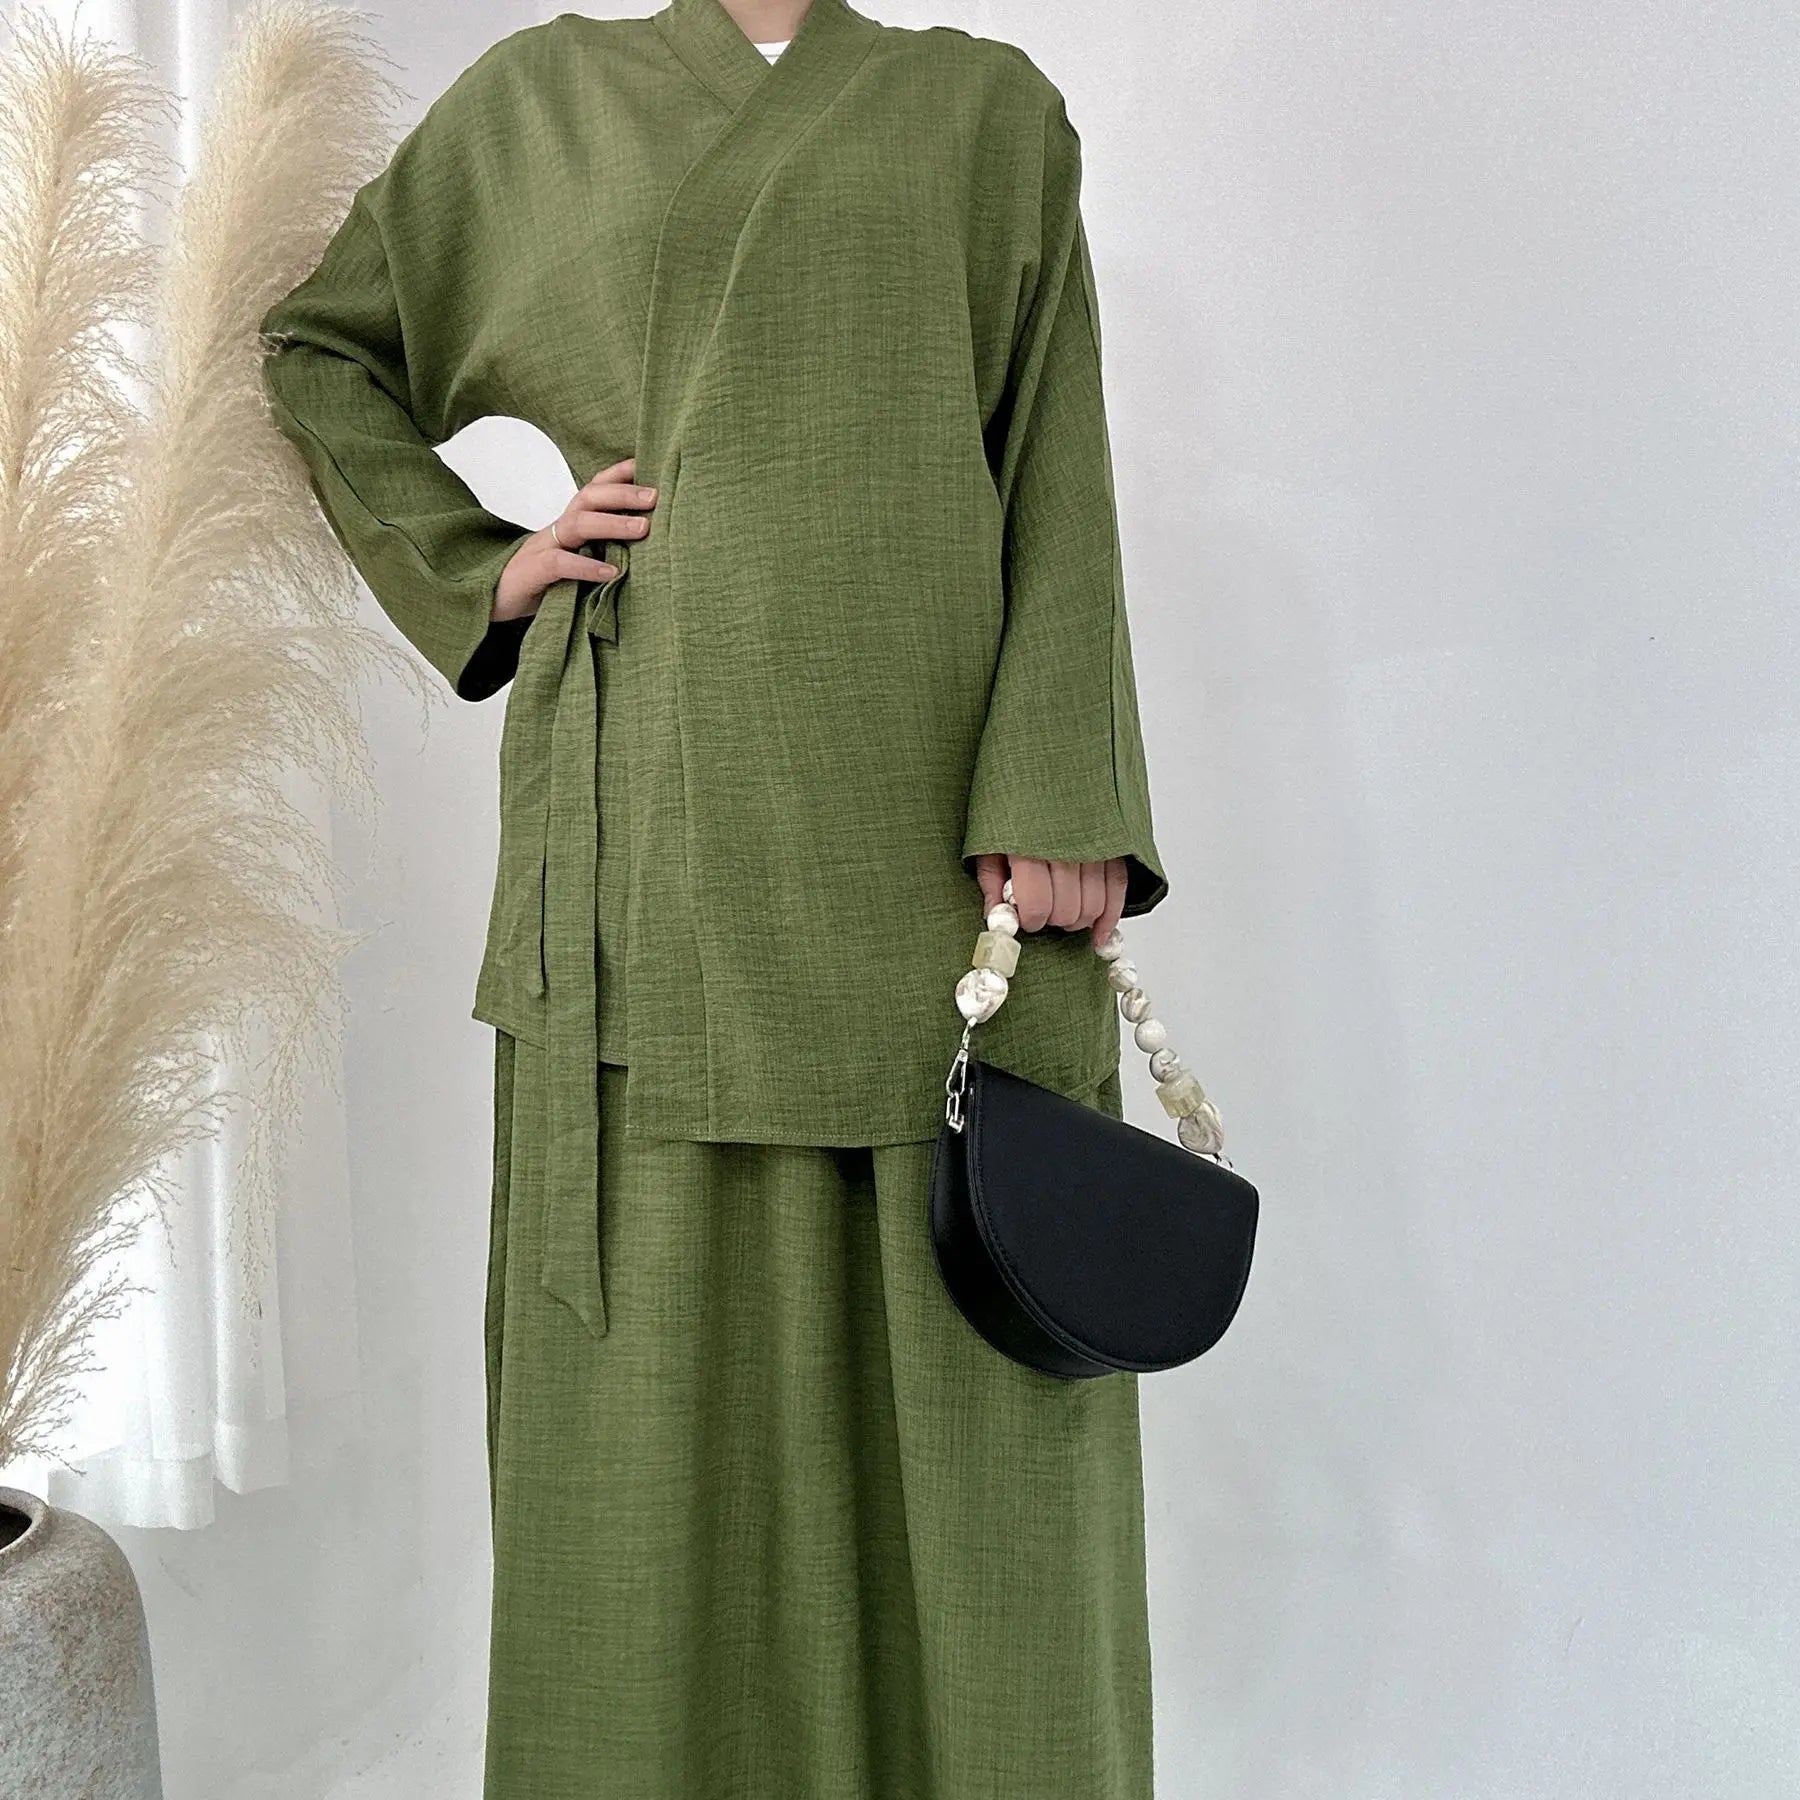 Women's Arabian Polyester Full Sleeve Solid Pattern Casual Dresses